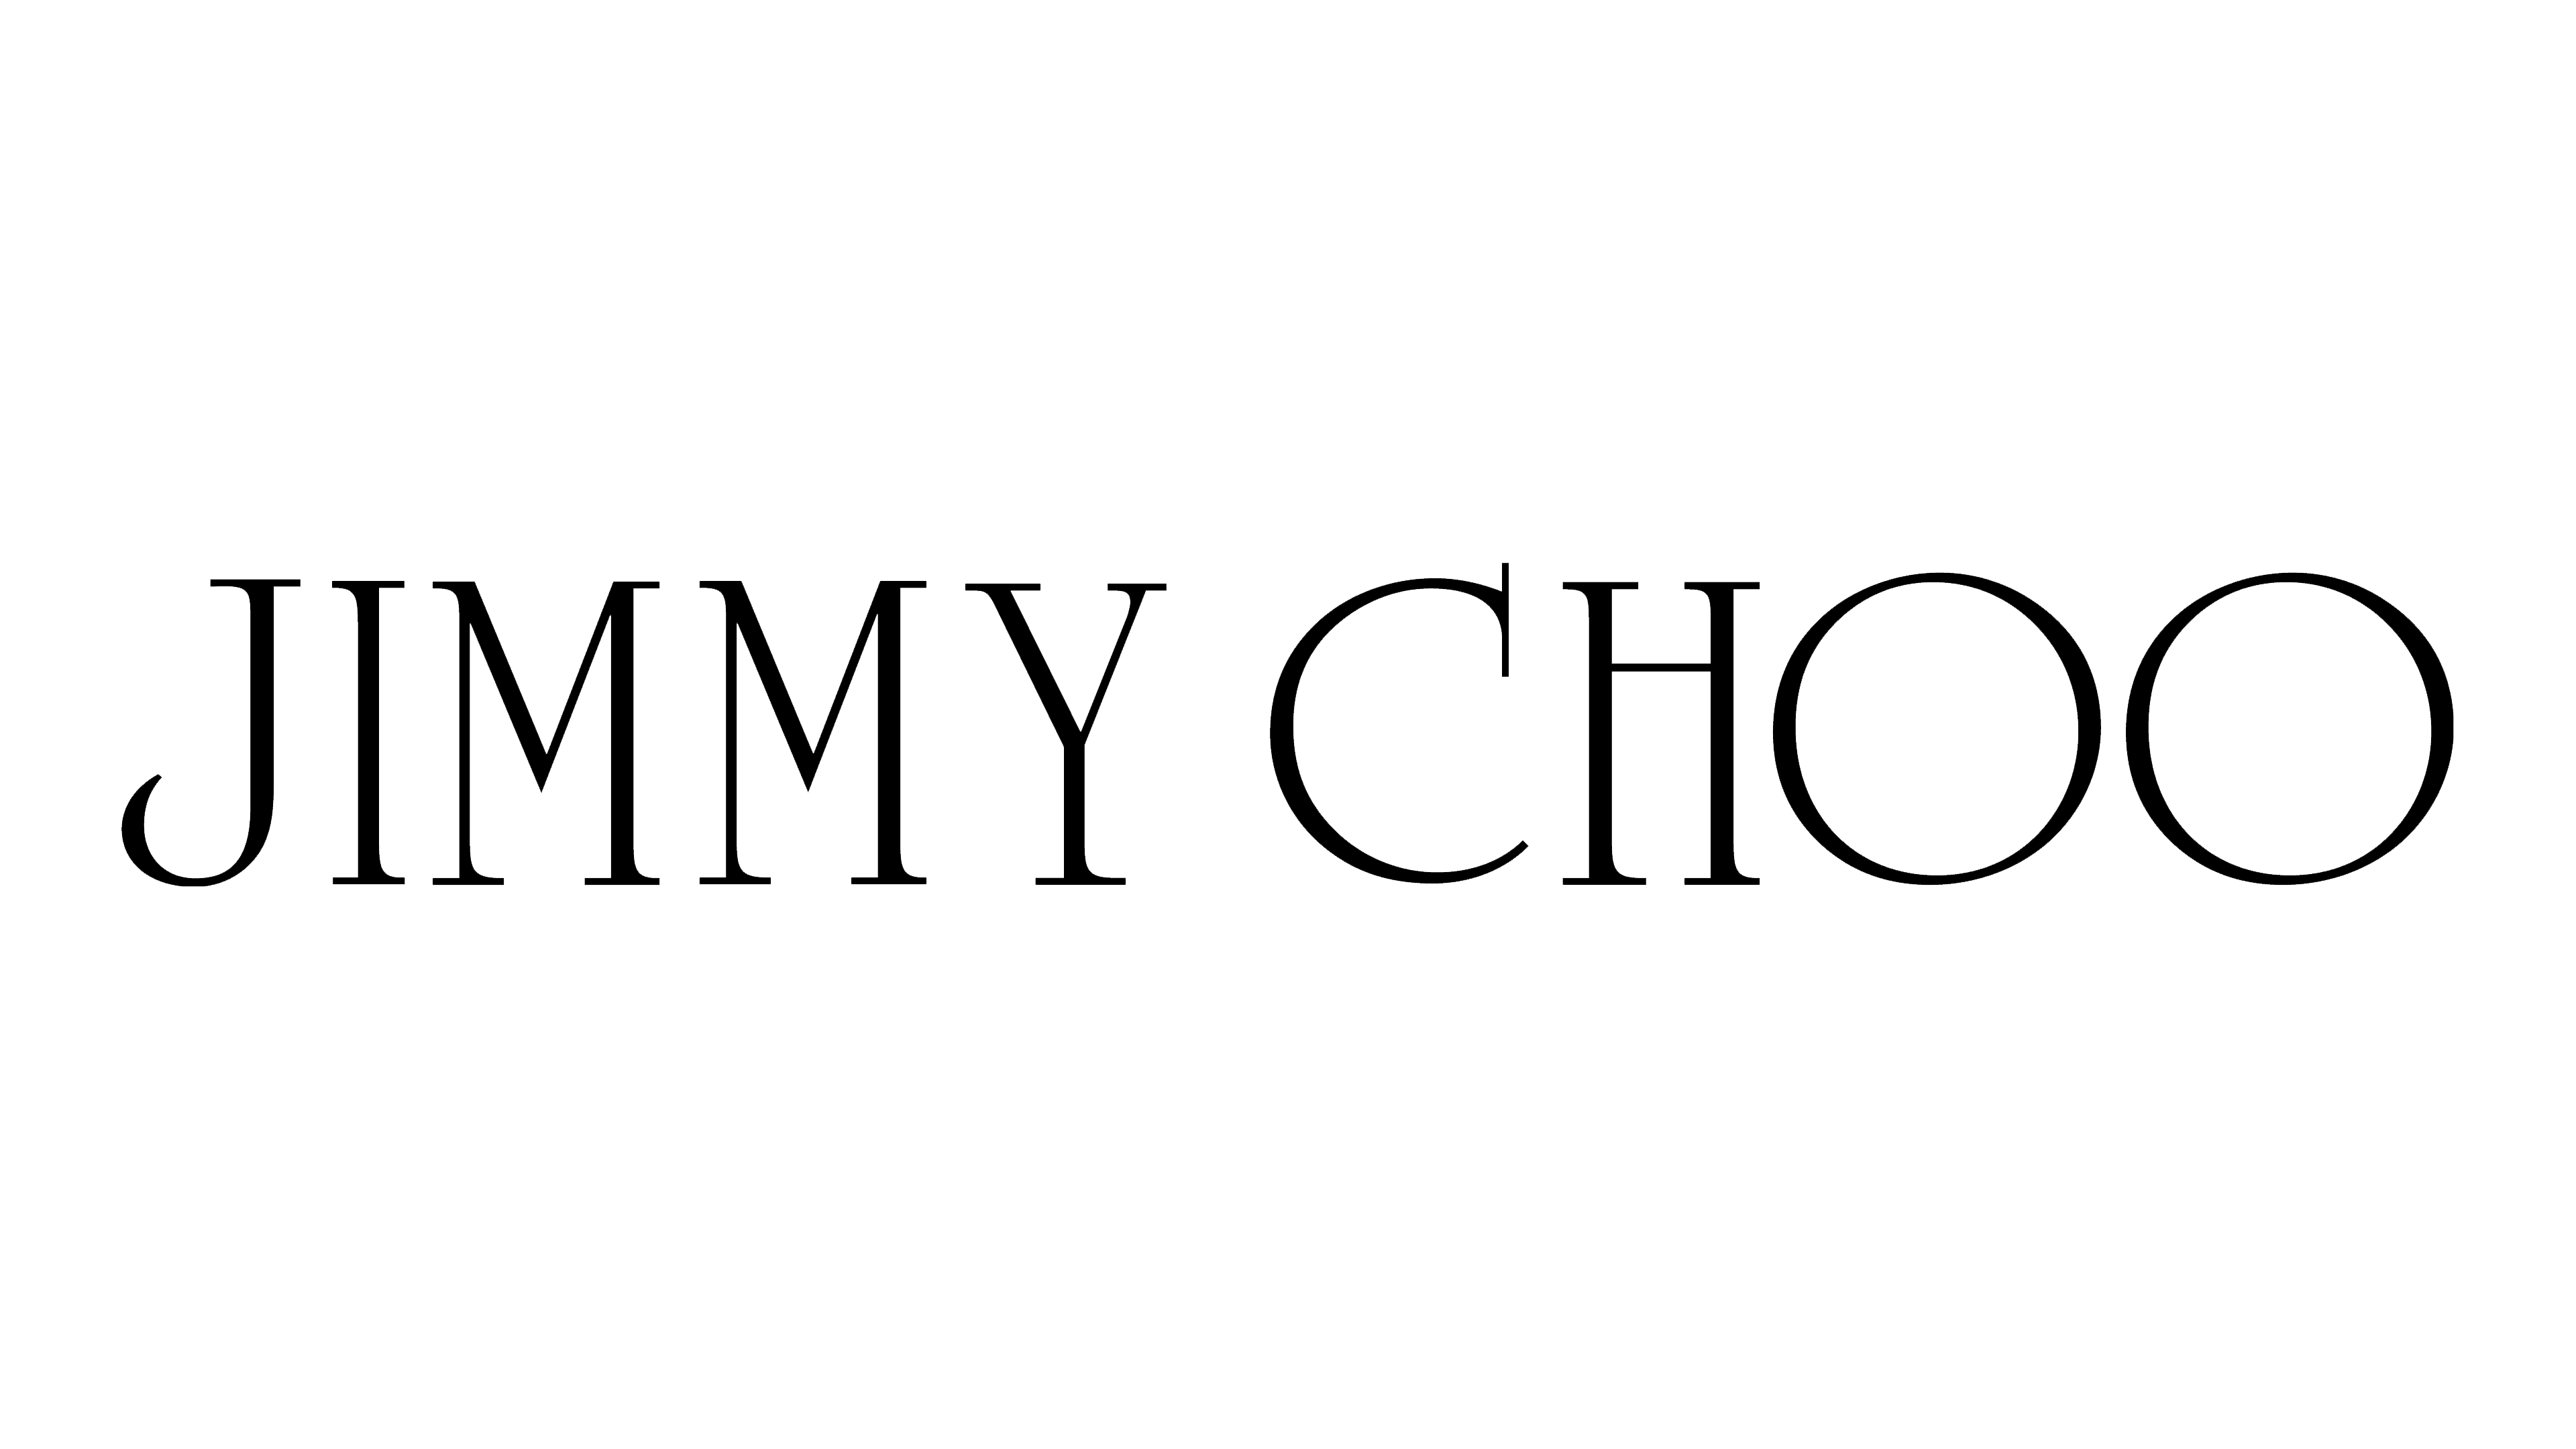 Jimmy Choo® Repair  Jimmy choo, Jimmy, Fashion logo